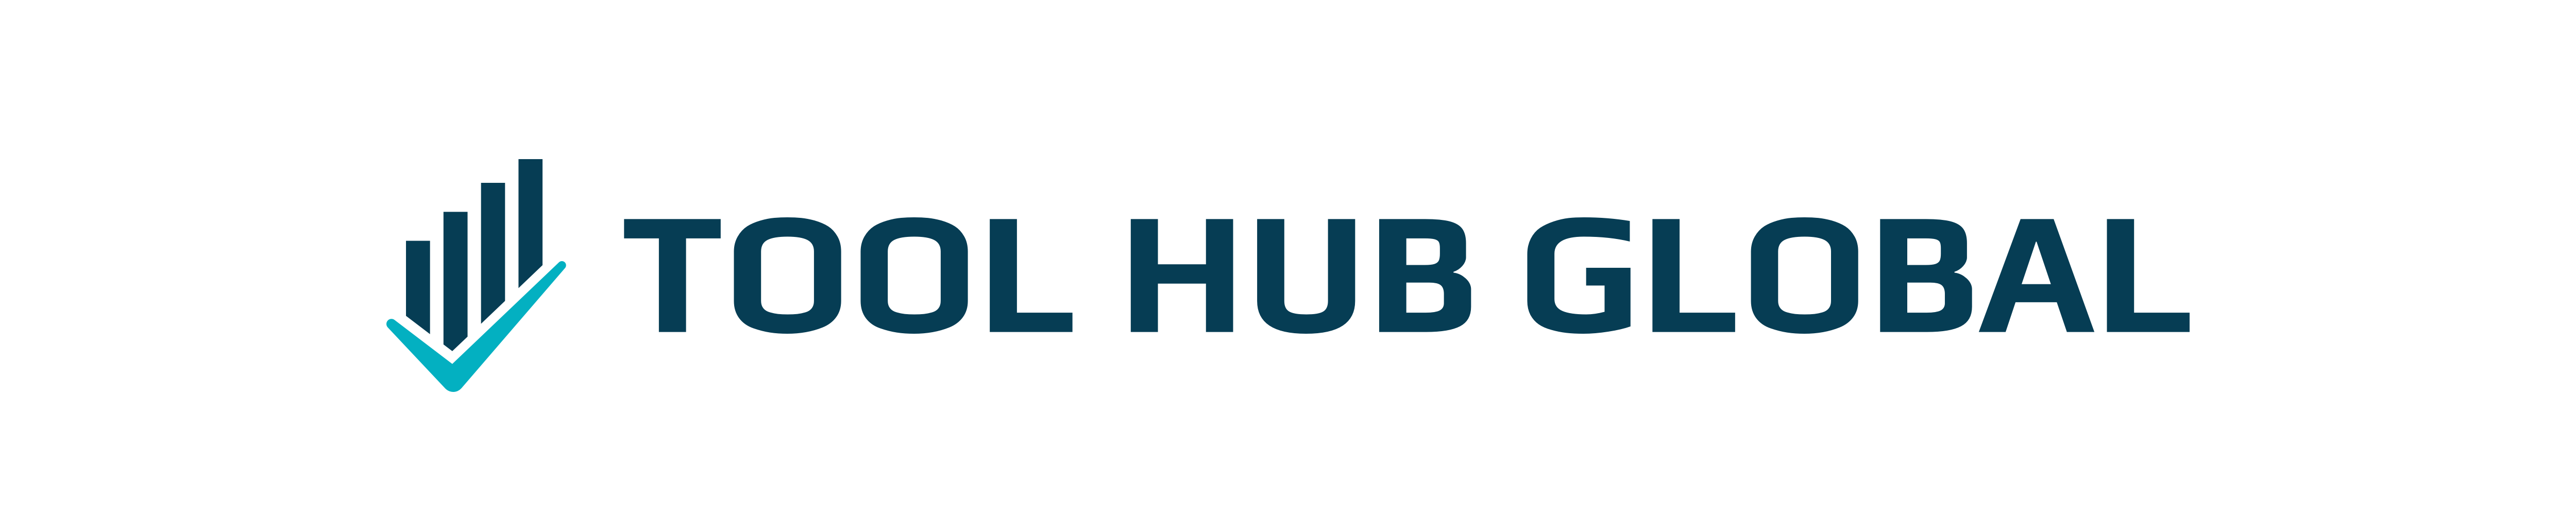 Tool Hub Global